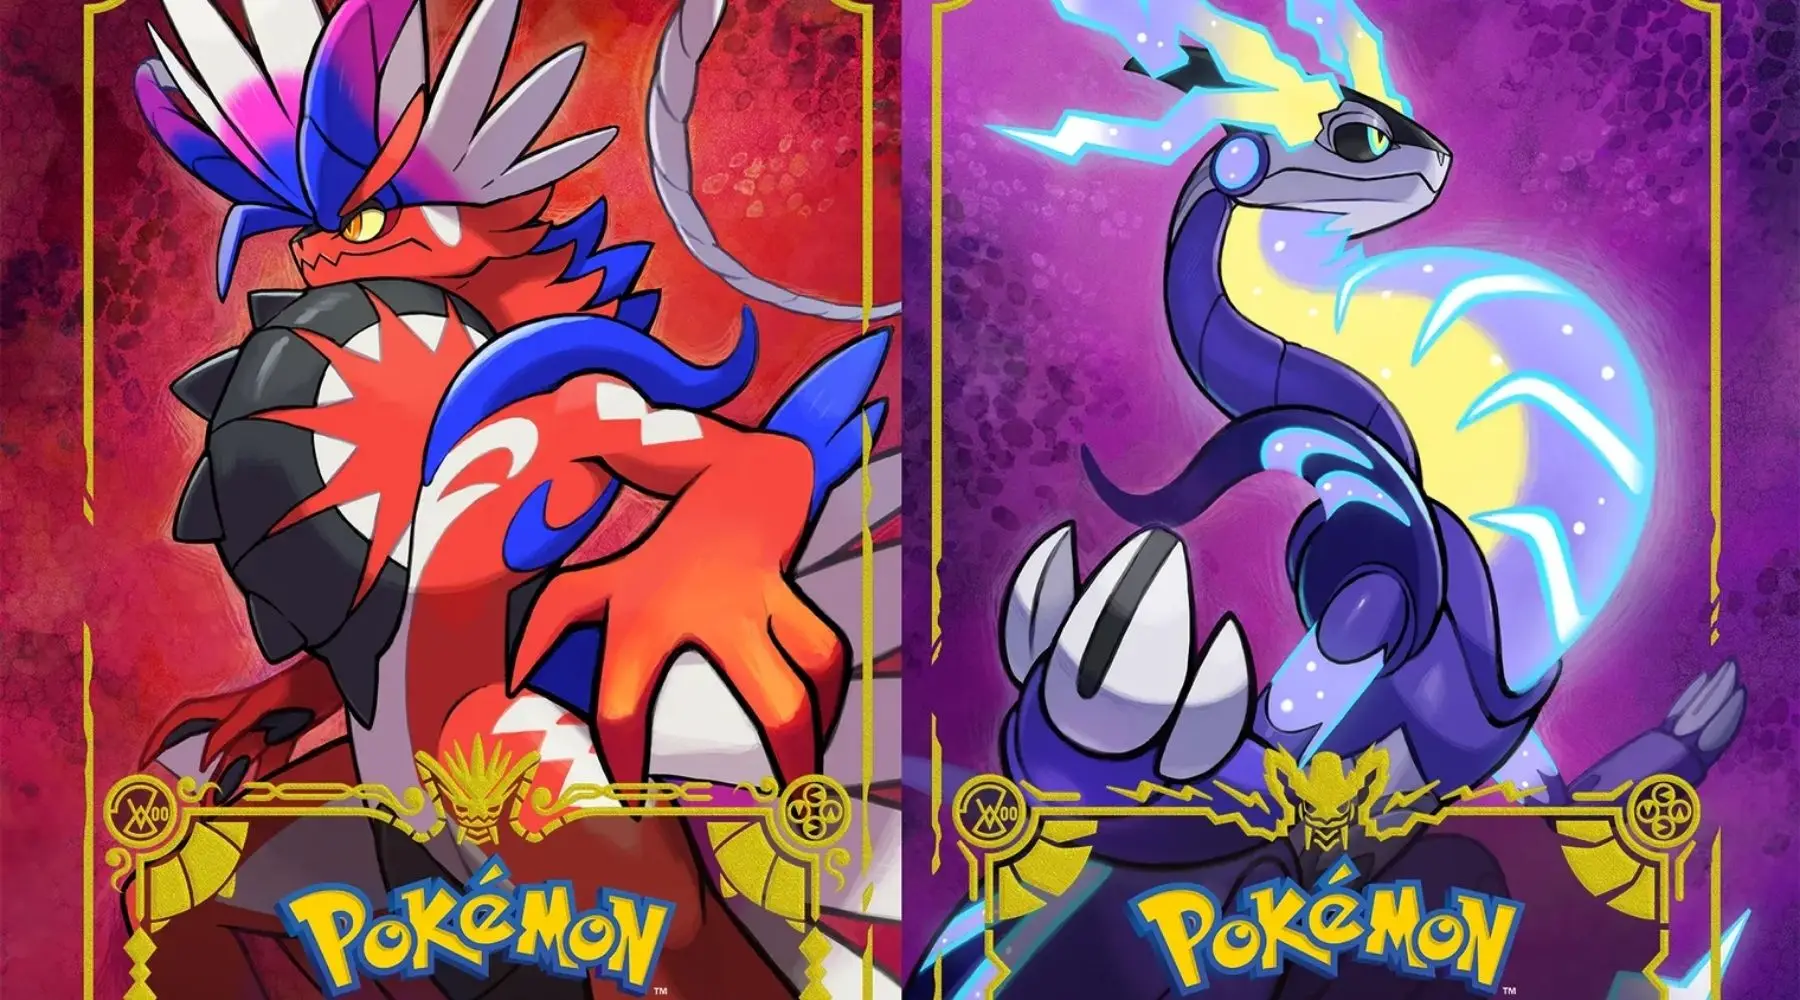 Play Record Bonuses — Pokémon Scarlet and Pokémon Violet